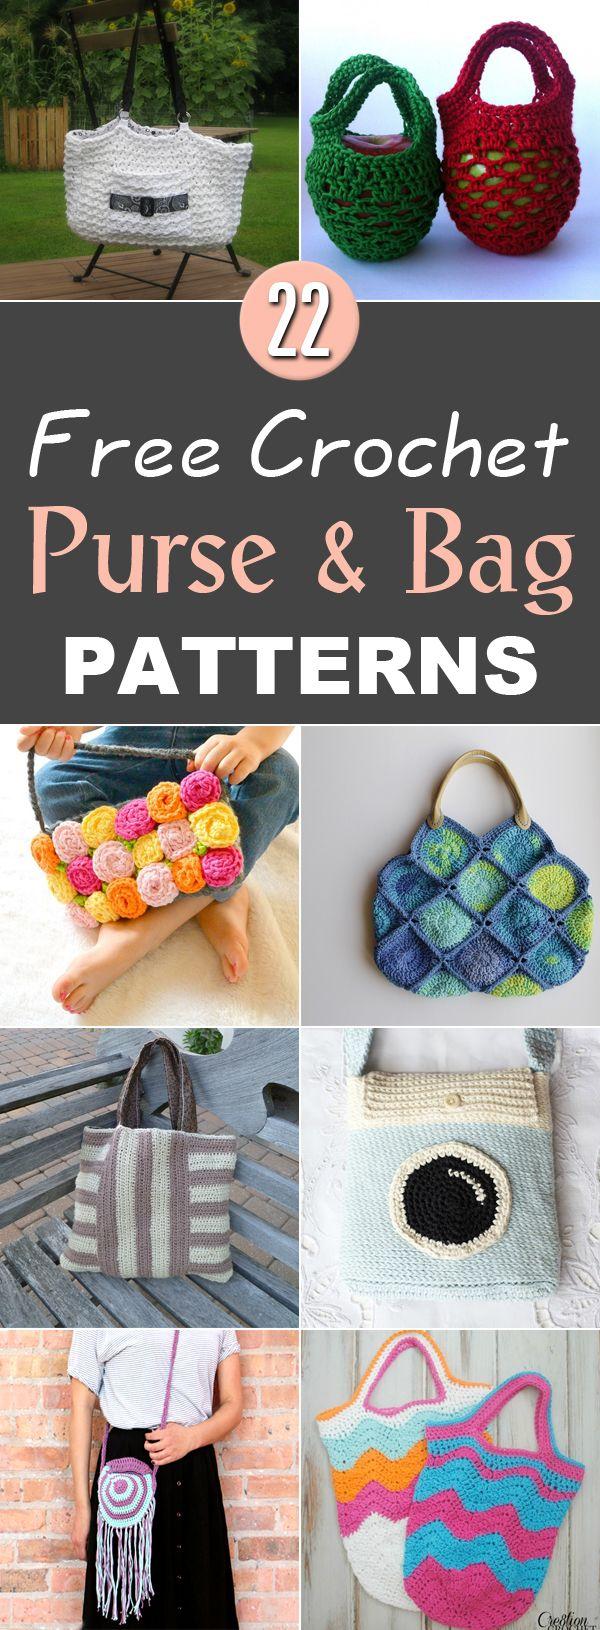 Свадьба - 22 Free Crochet Purse & Bag Patterns